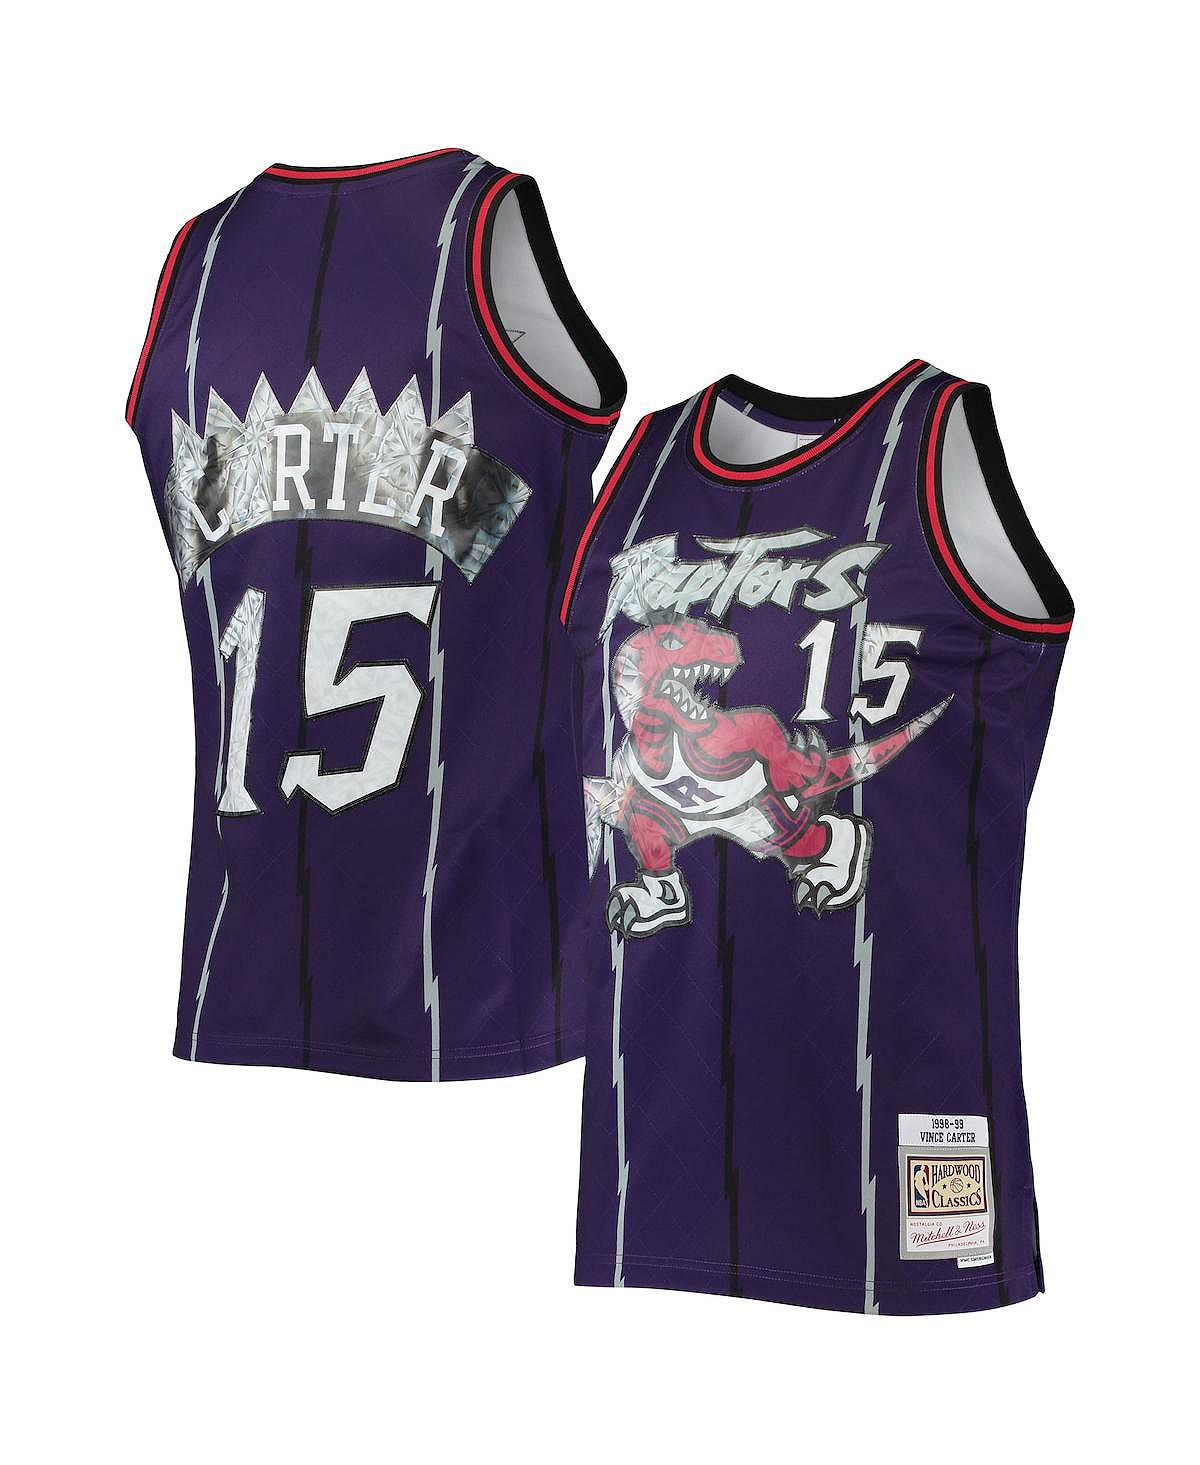 Мужская vince carter purple toronto raptors 1998-99 hardwood classics 75th anniversary diamond swingman jersey Mitchell & Ness, фиолетовый